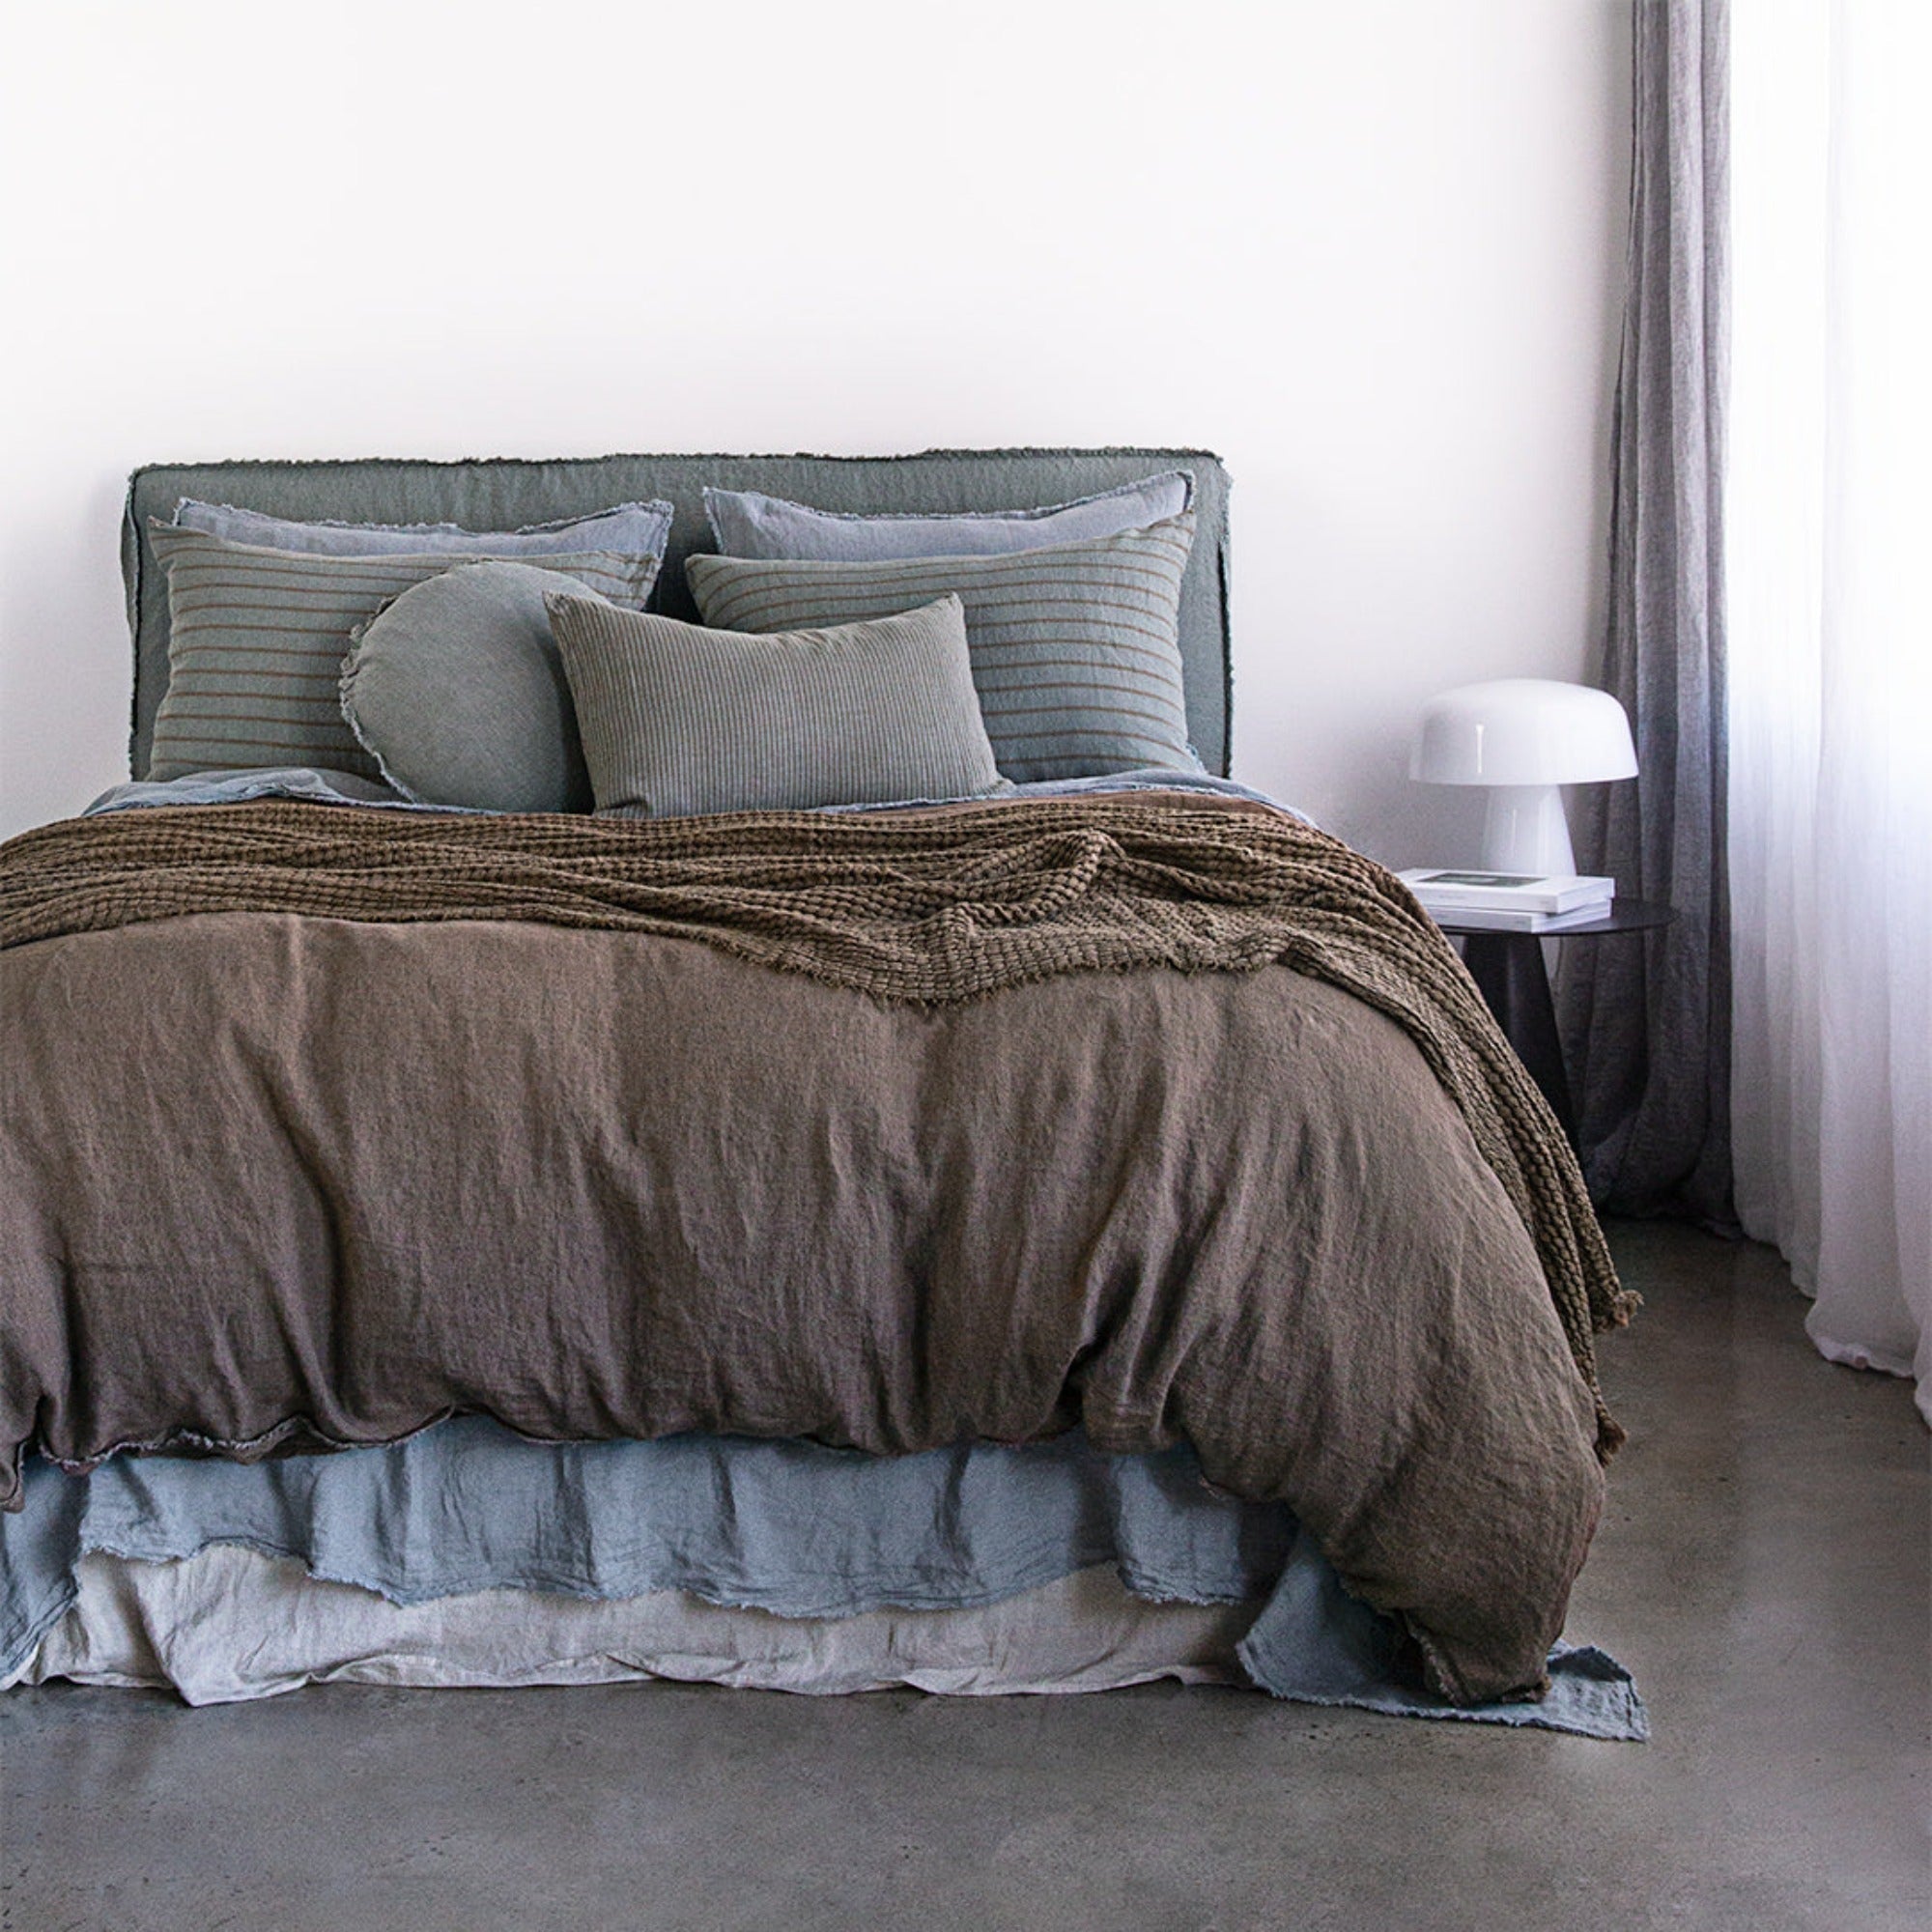 Stripe Linen Pillowcase | Teal & Brown  | Hale Mercantile Co.